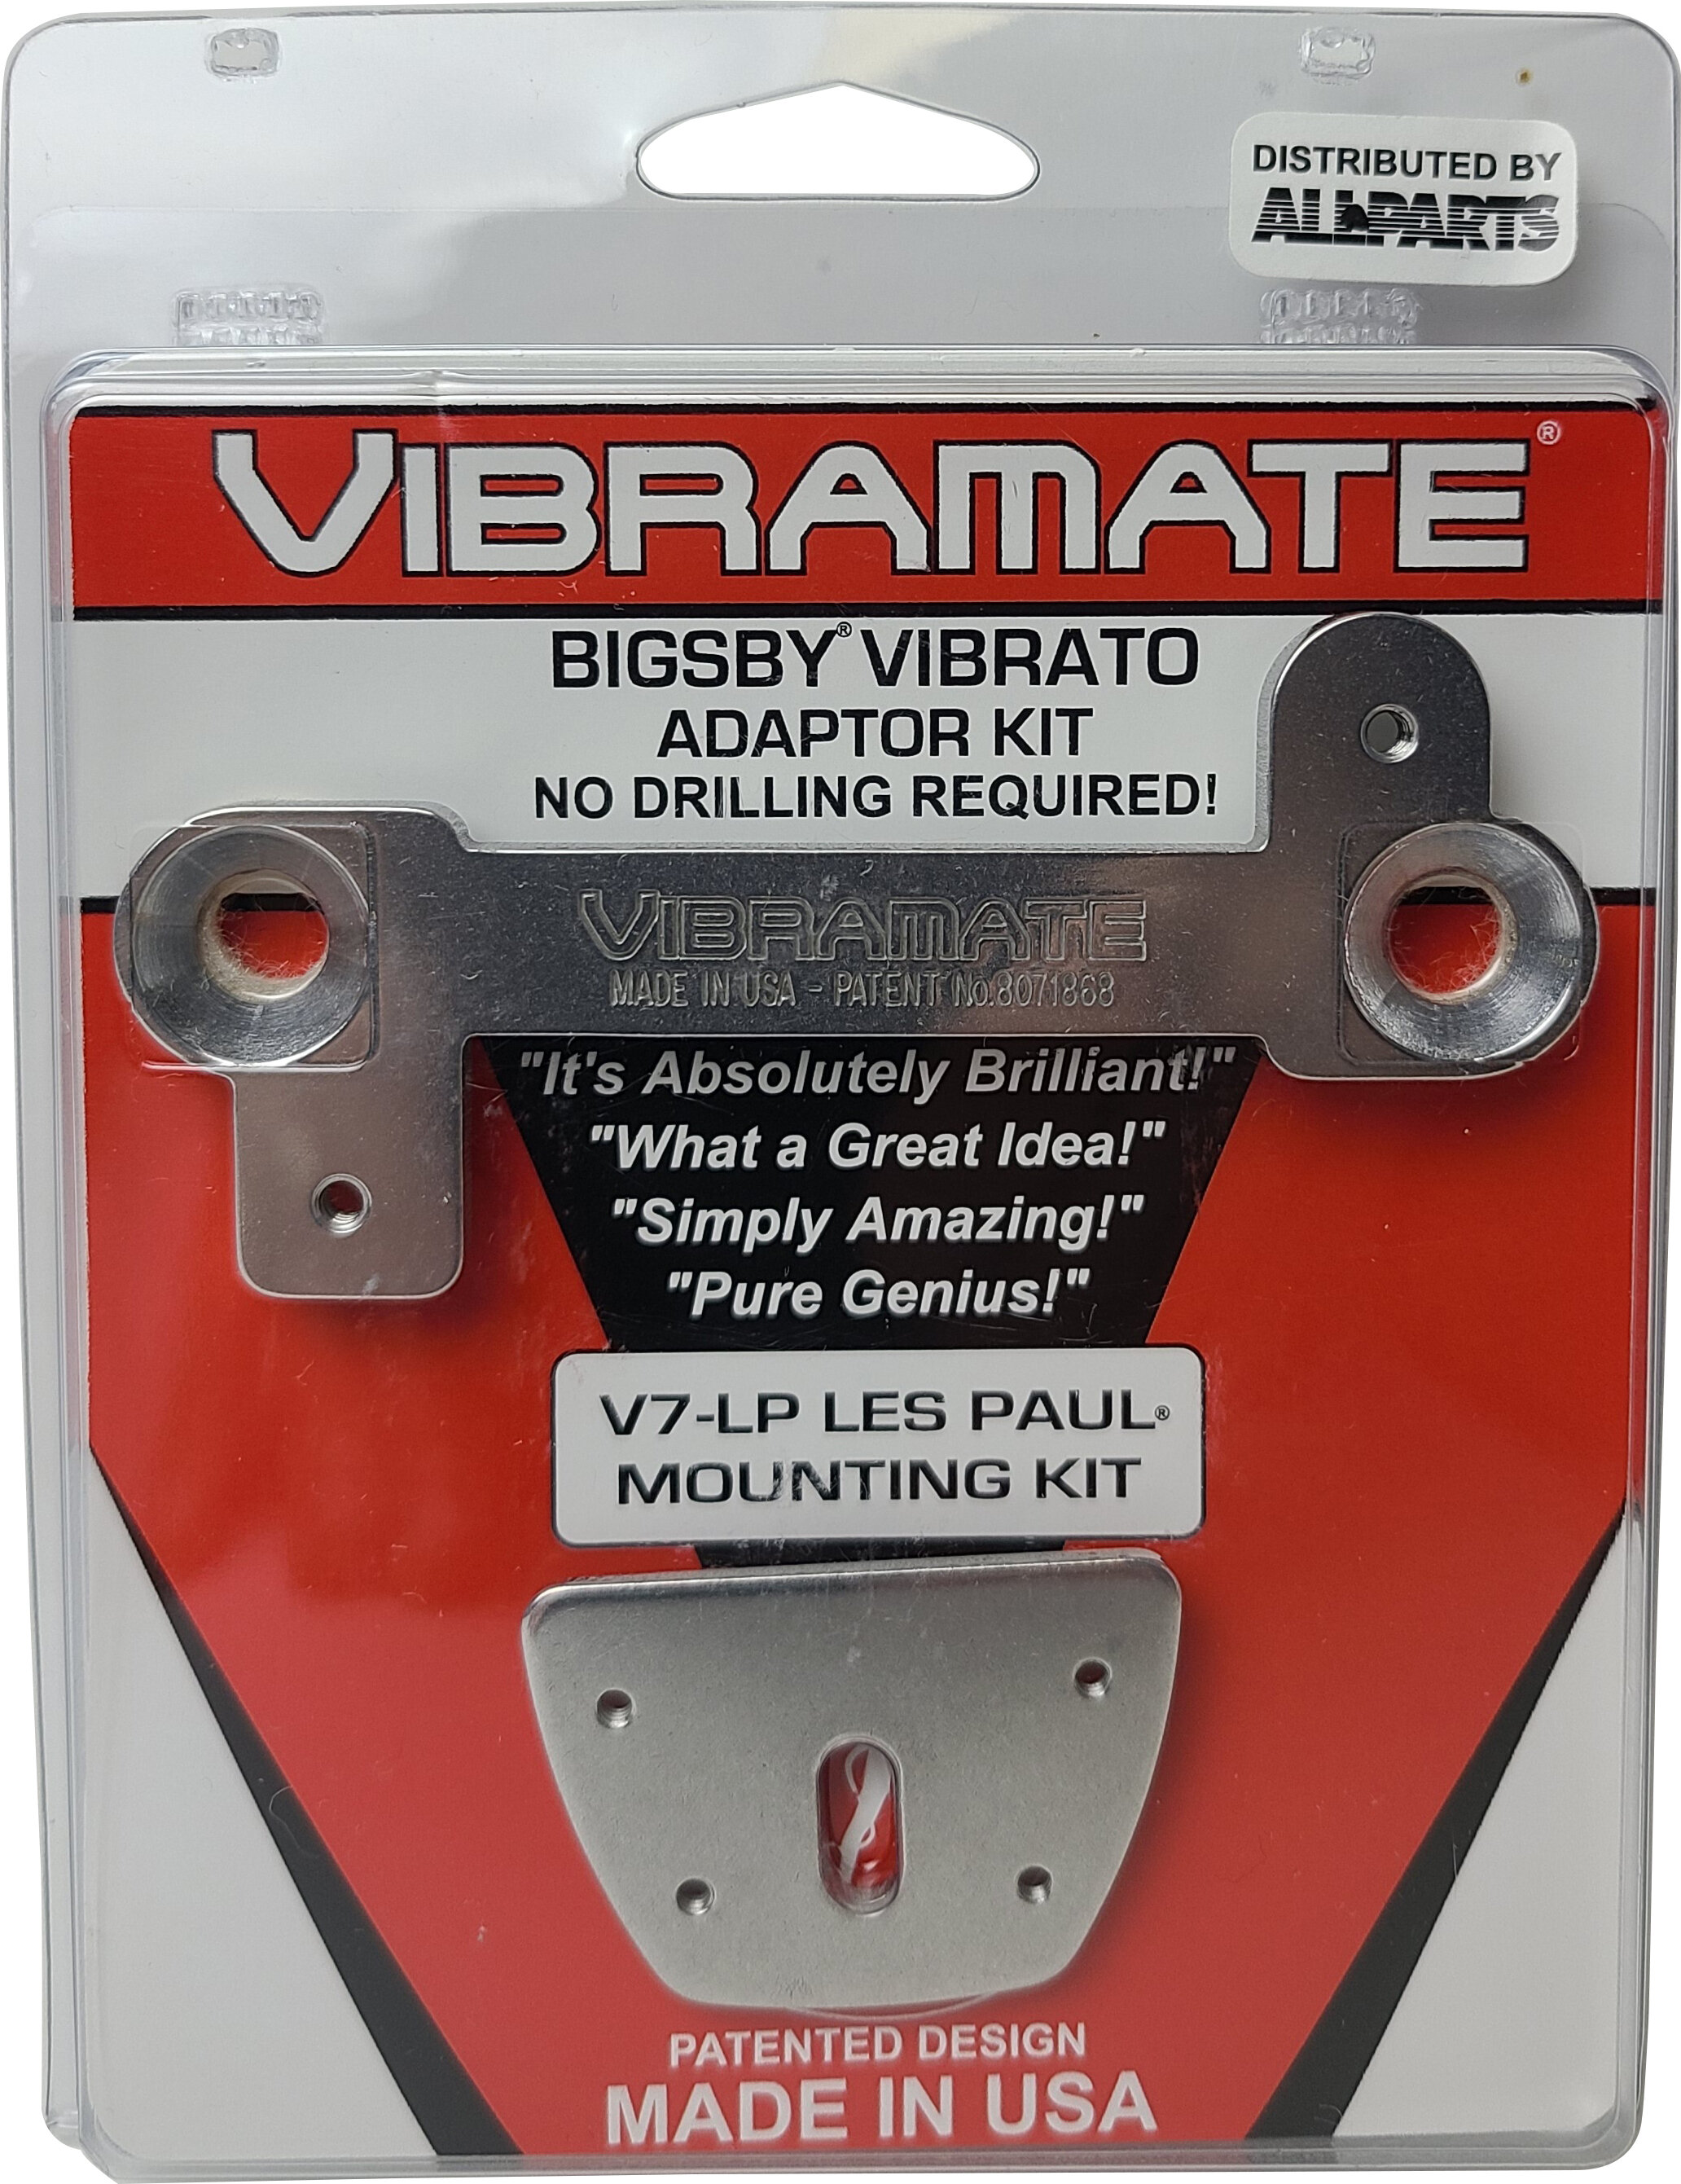 Vibramate V7-LP Les Paul Adaptor Kit for Bigsby B7 -  Allparts, TP-3770-001